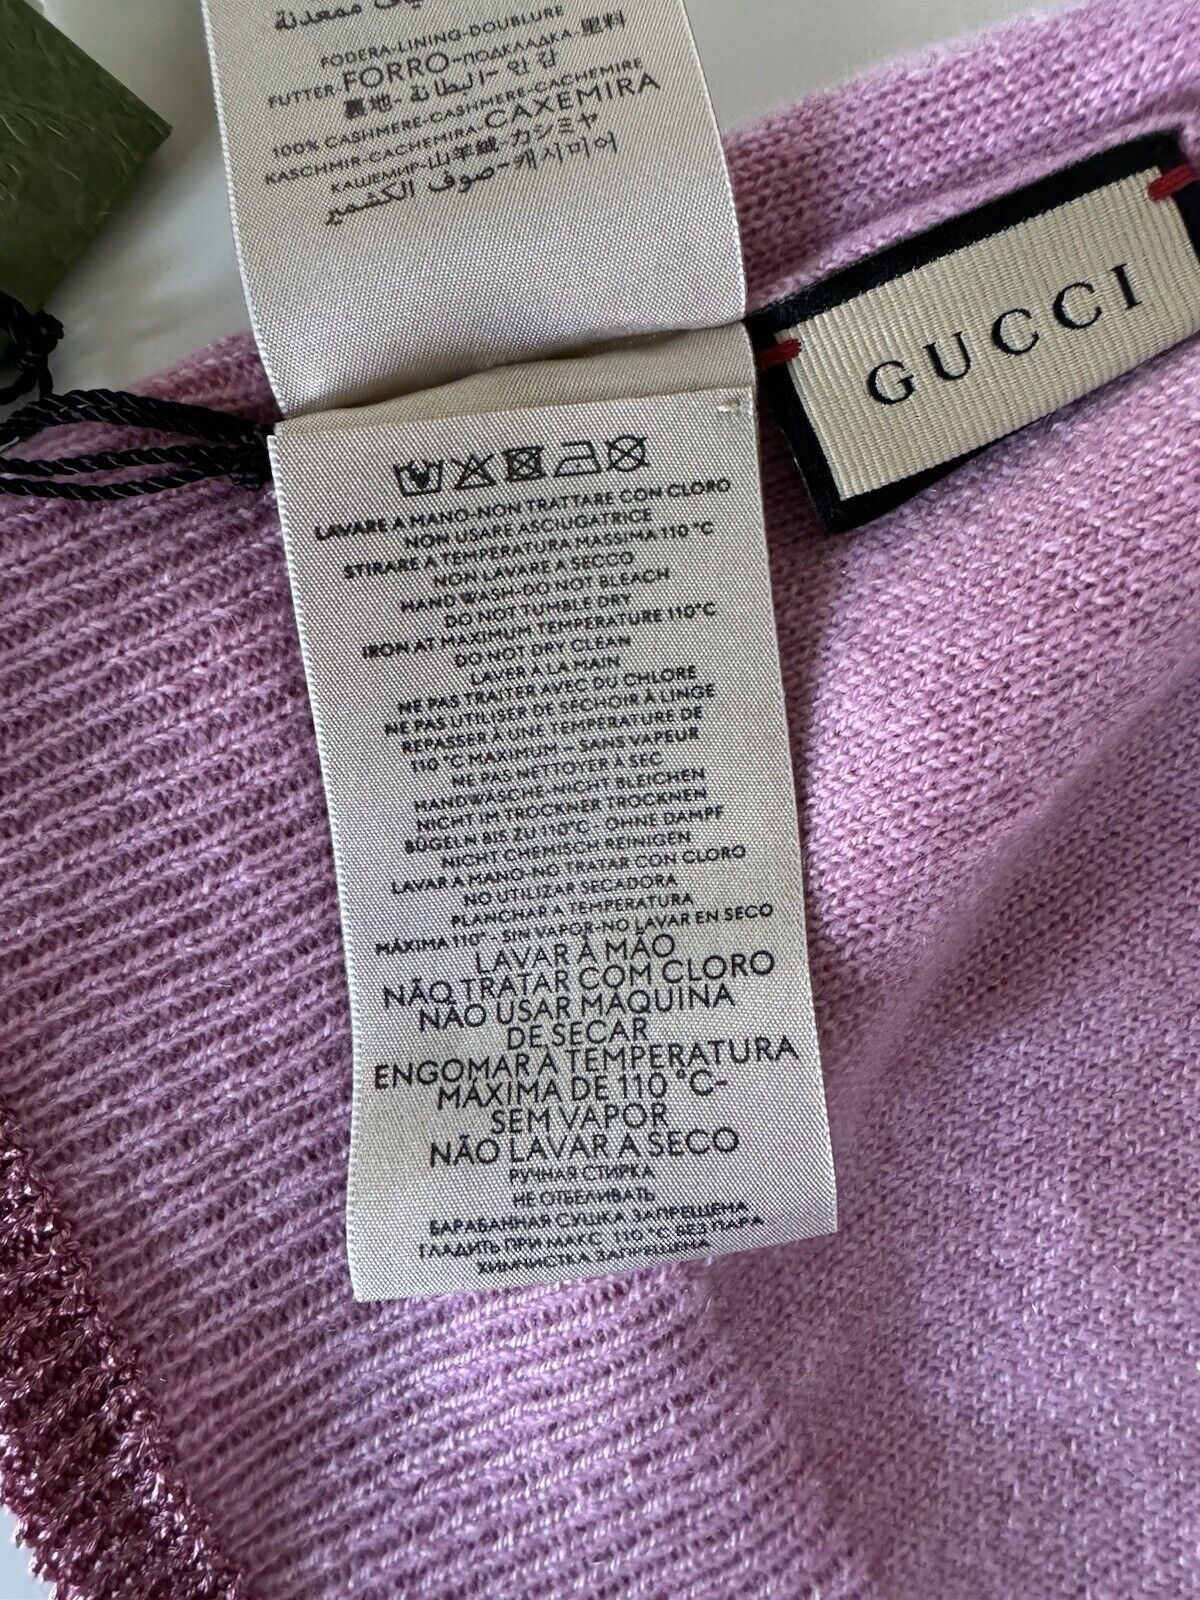 NWT Gucci Knit Viscose/Cashmere Roseate Beanie Hat Medium (57 cm) Italy 677822